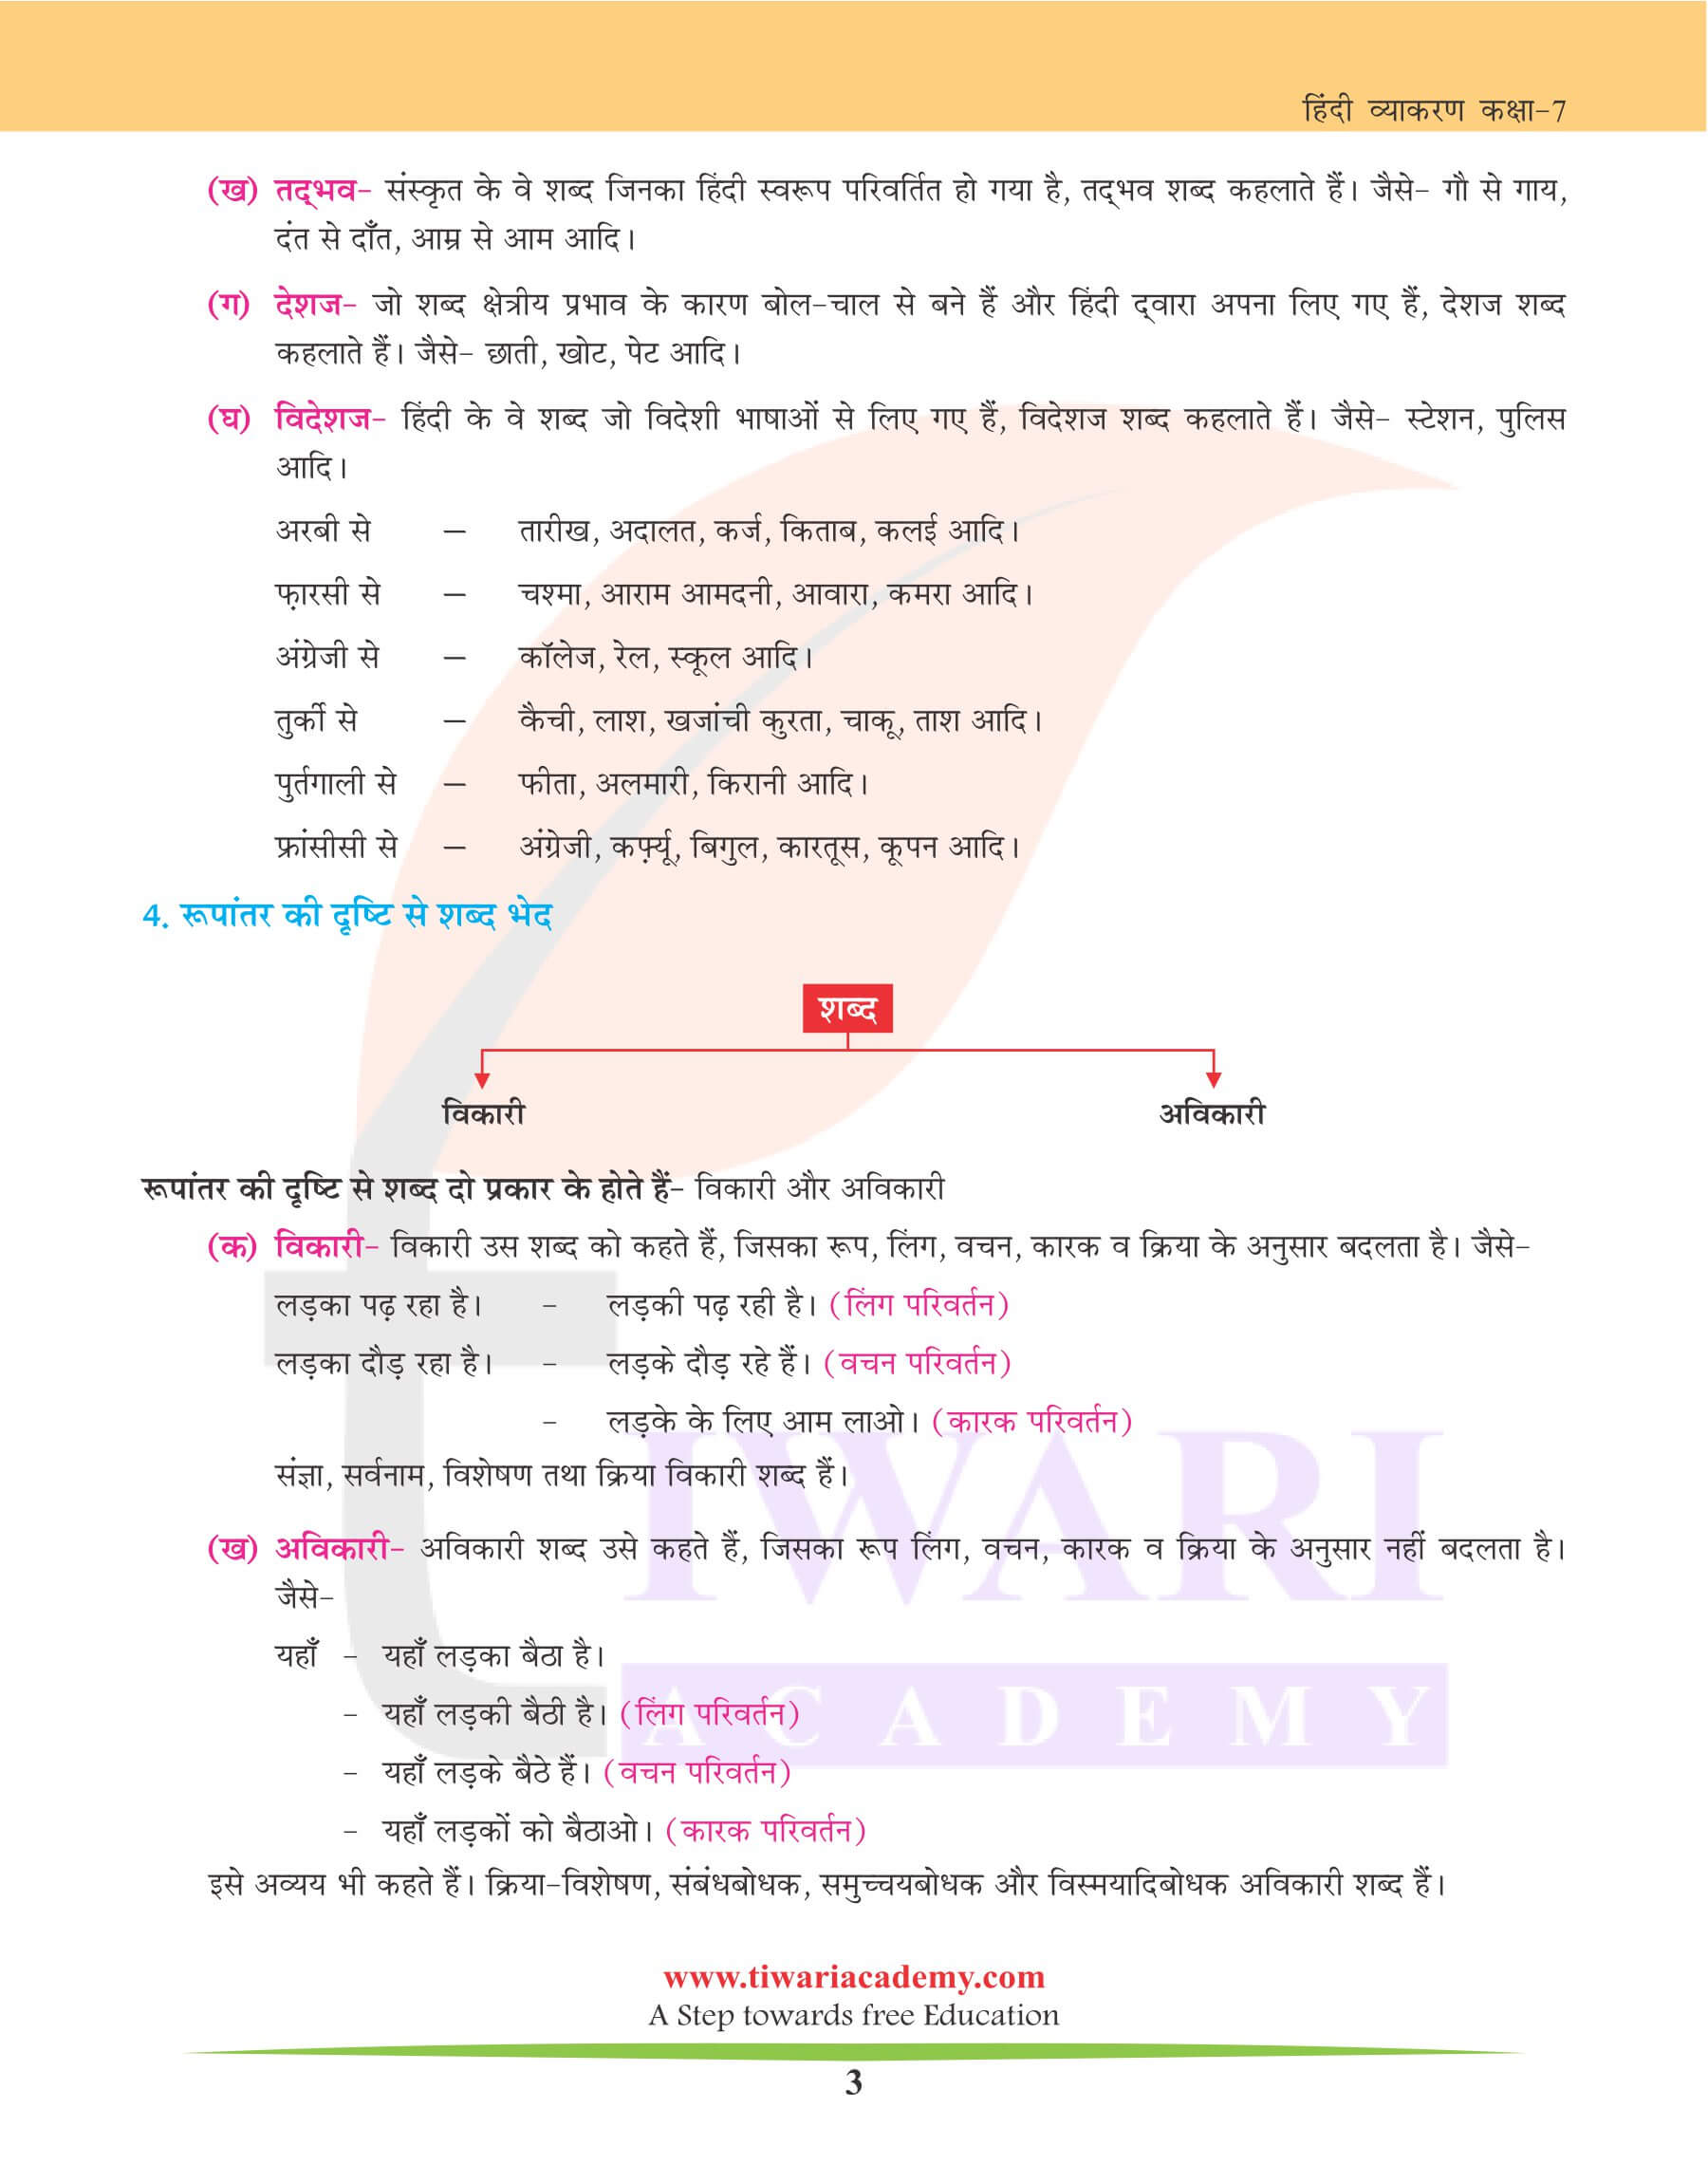 कक्षा 7 हिंदी व्याकरण शब्द विचार के अभ्यास प्रश्न